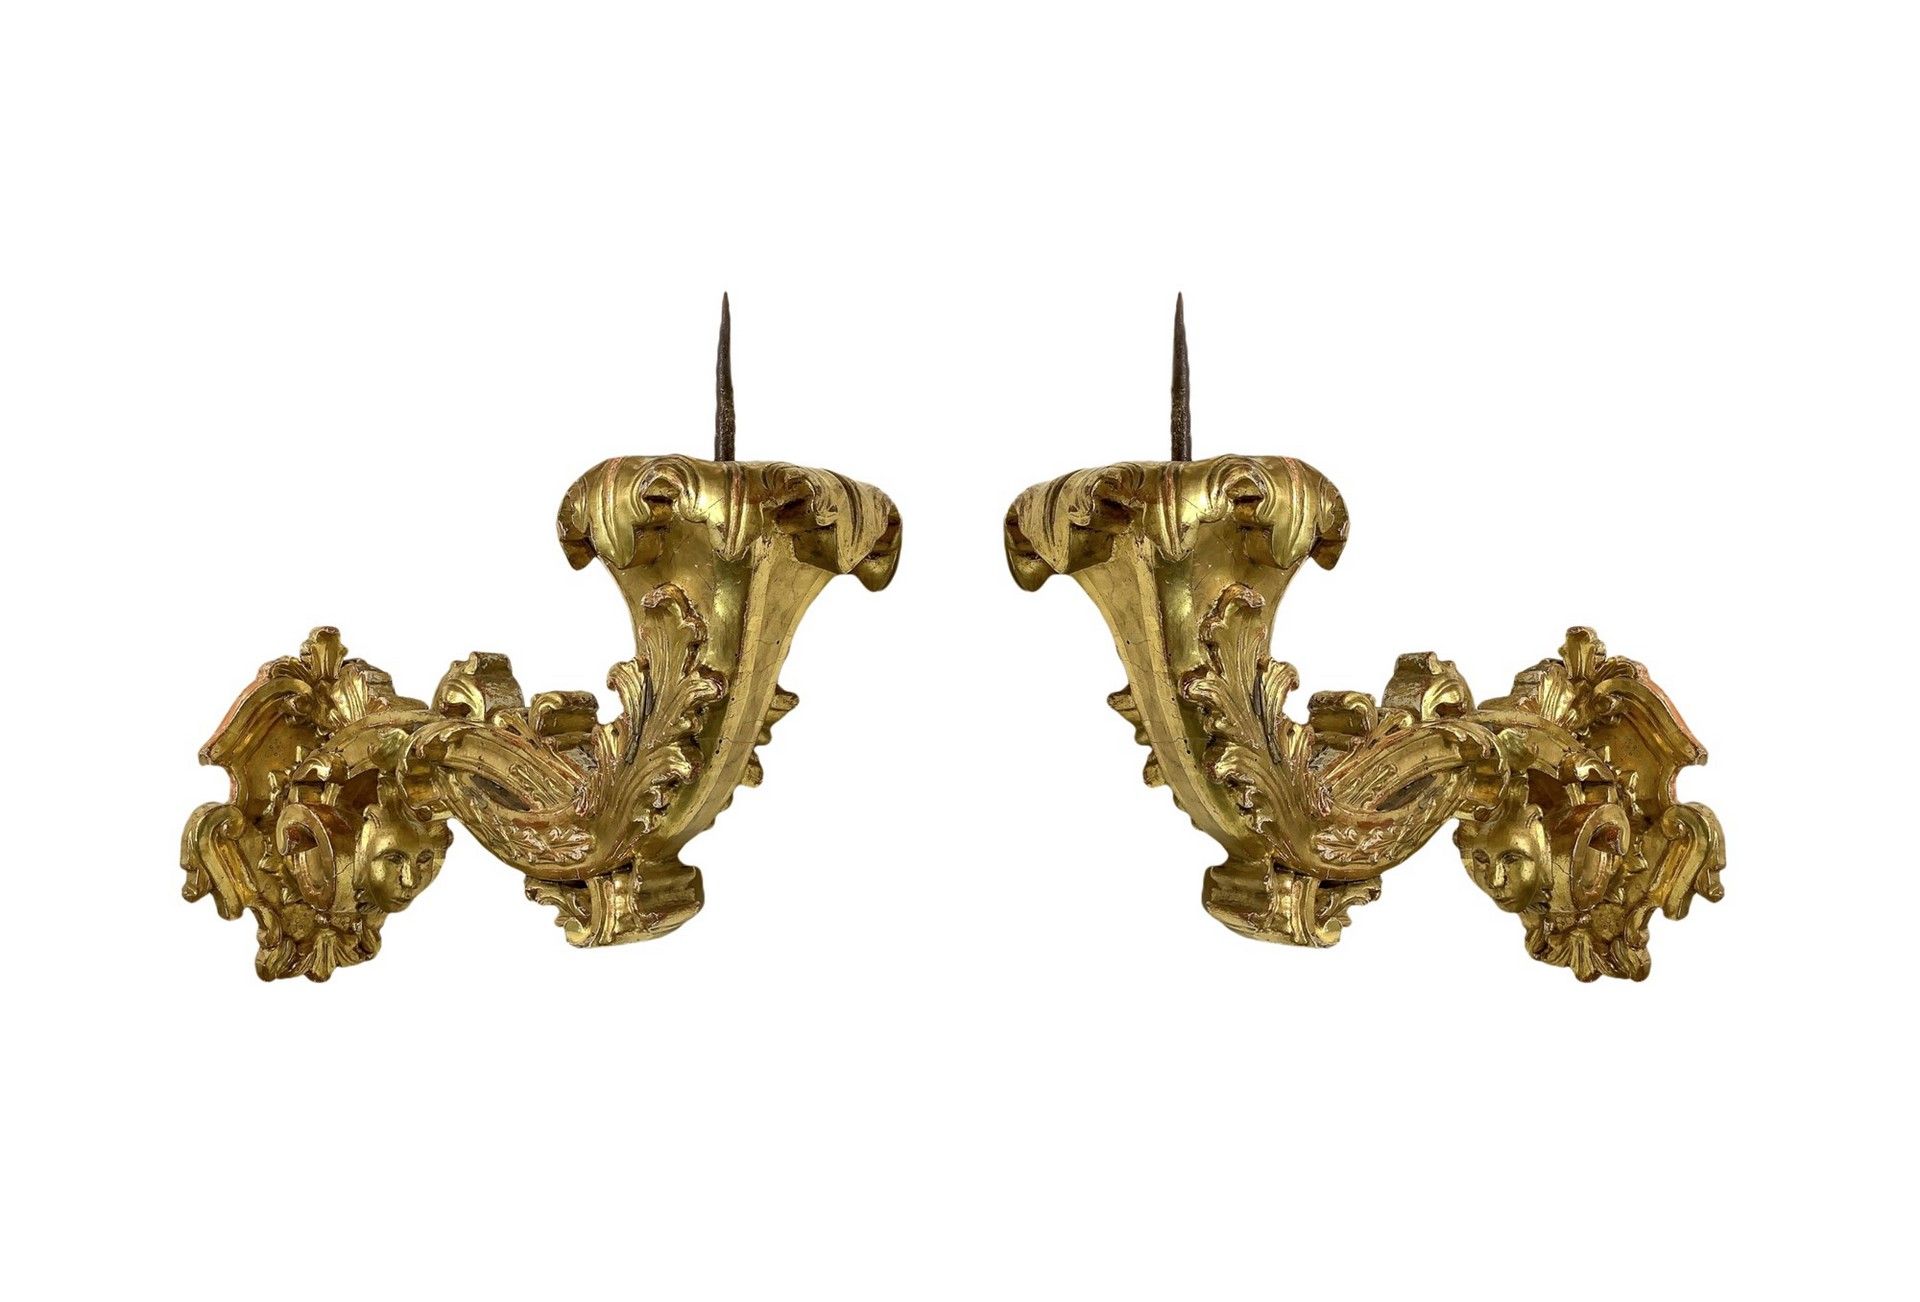 Null Par de brazos en madera dorada , siglo XVIII / XIX b 30x35cm, longitud 65cm